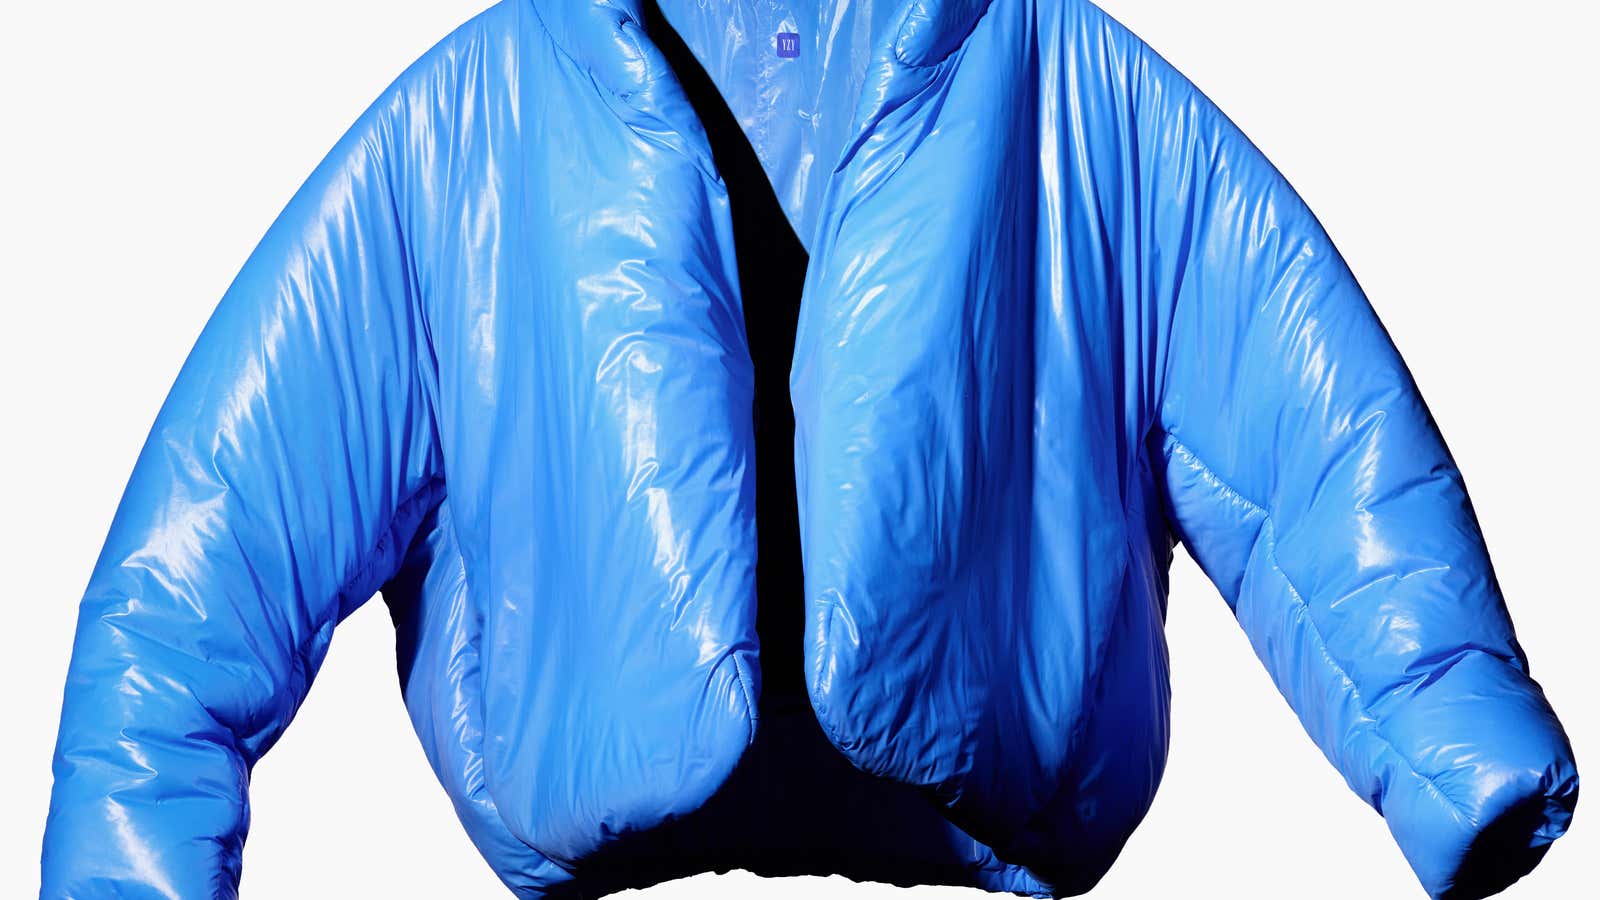 The Yeezy Gap “round jacket.”